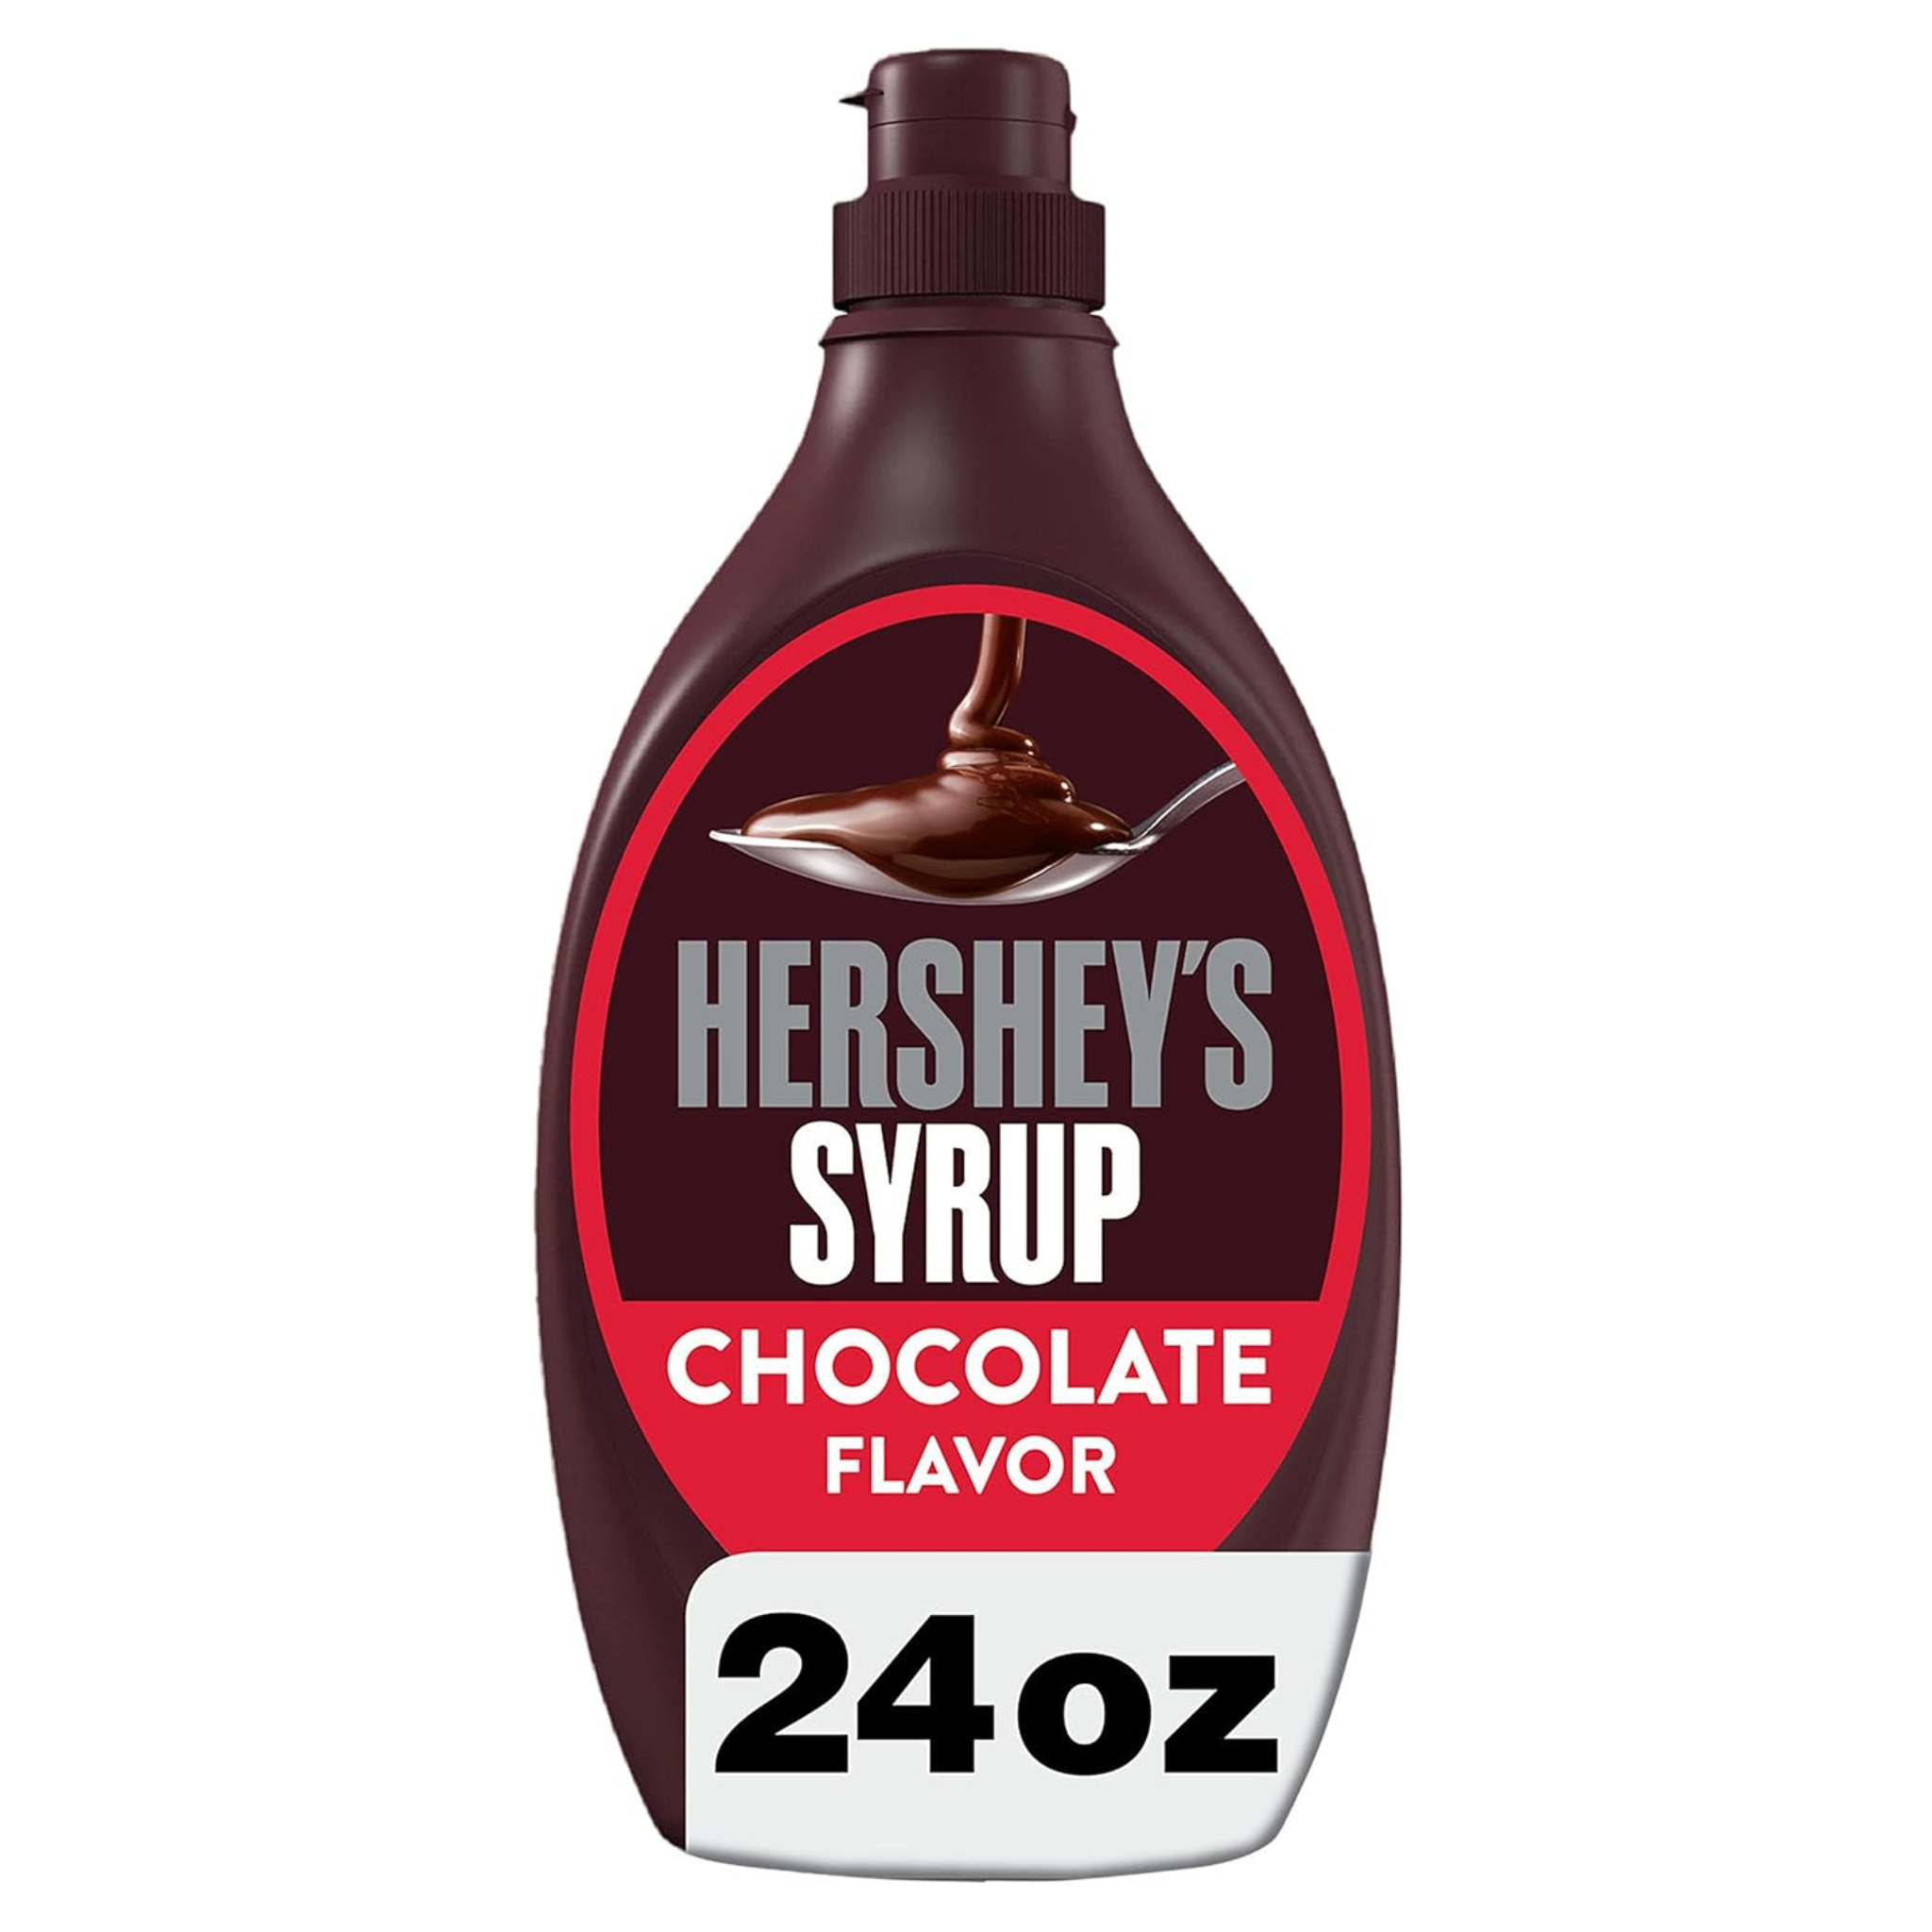 Hershey's Chocolate Syrup (24oz bottle)